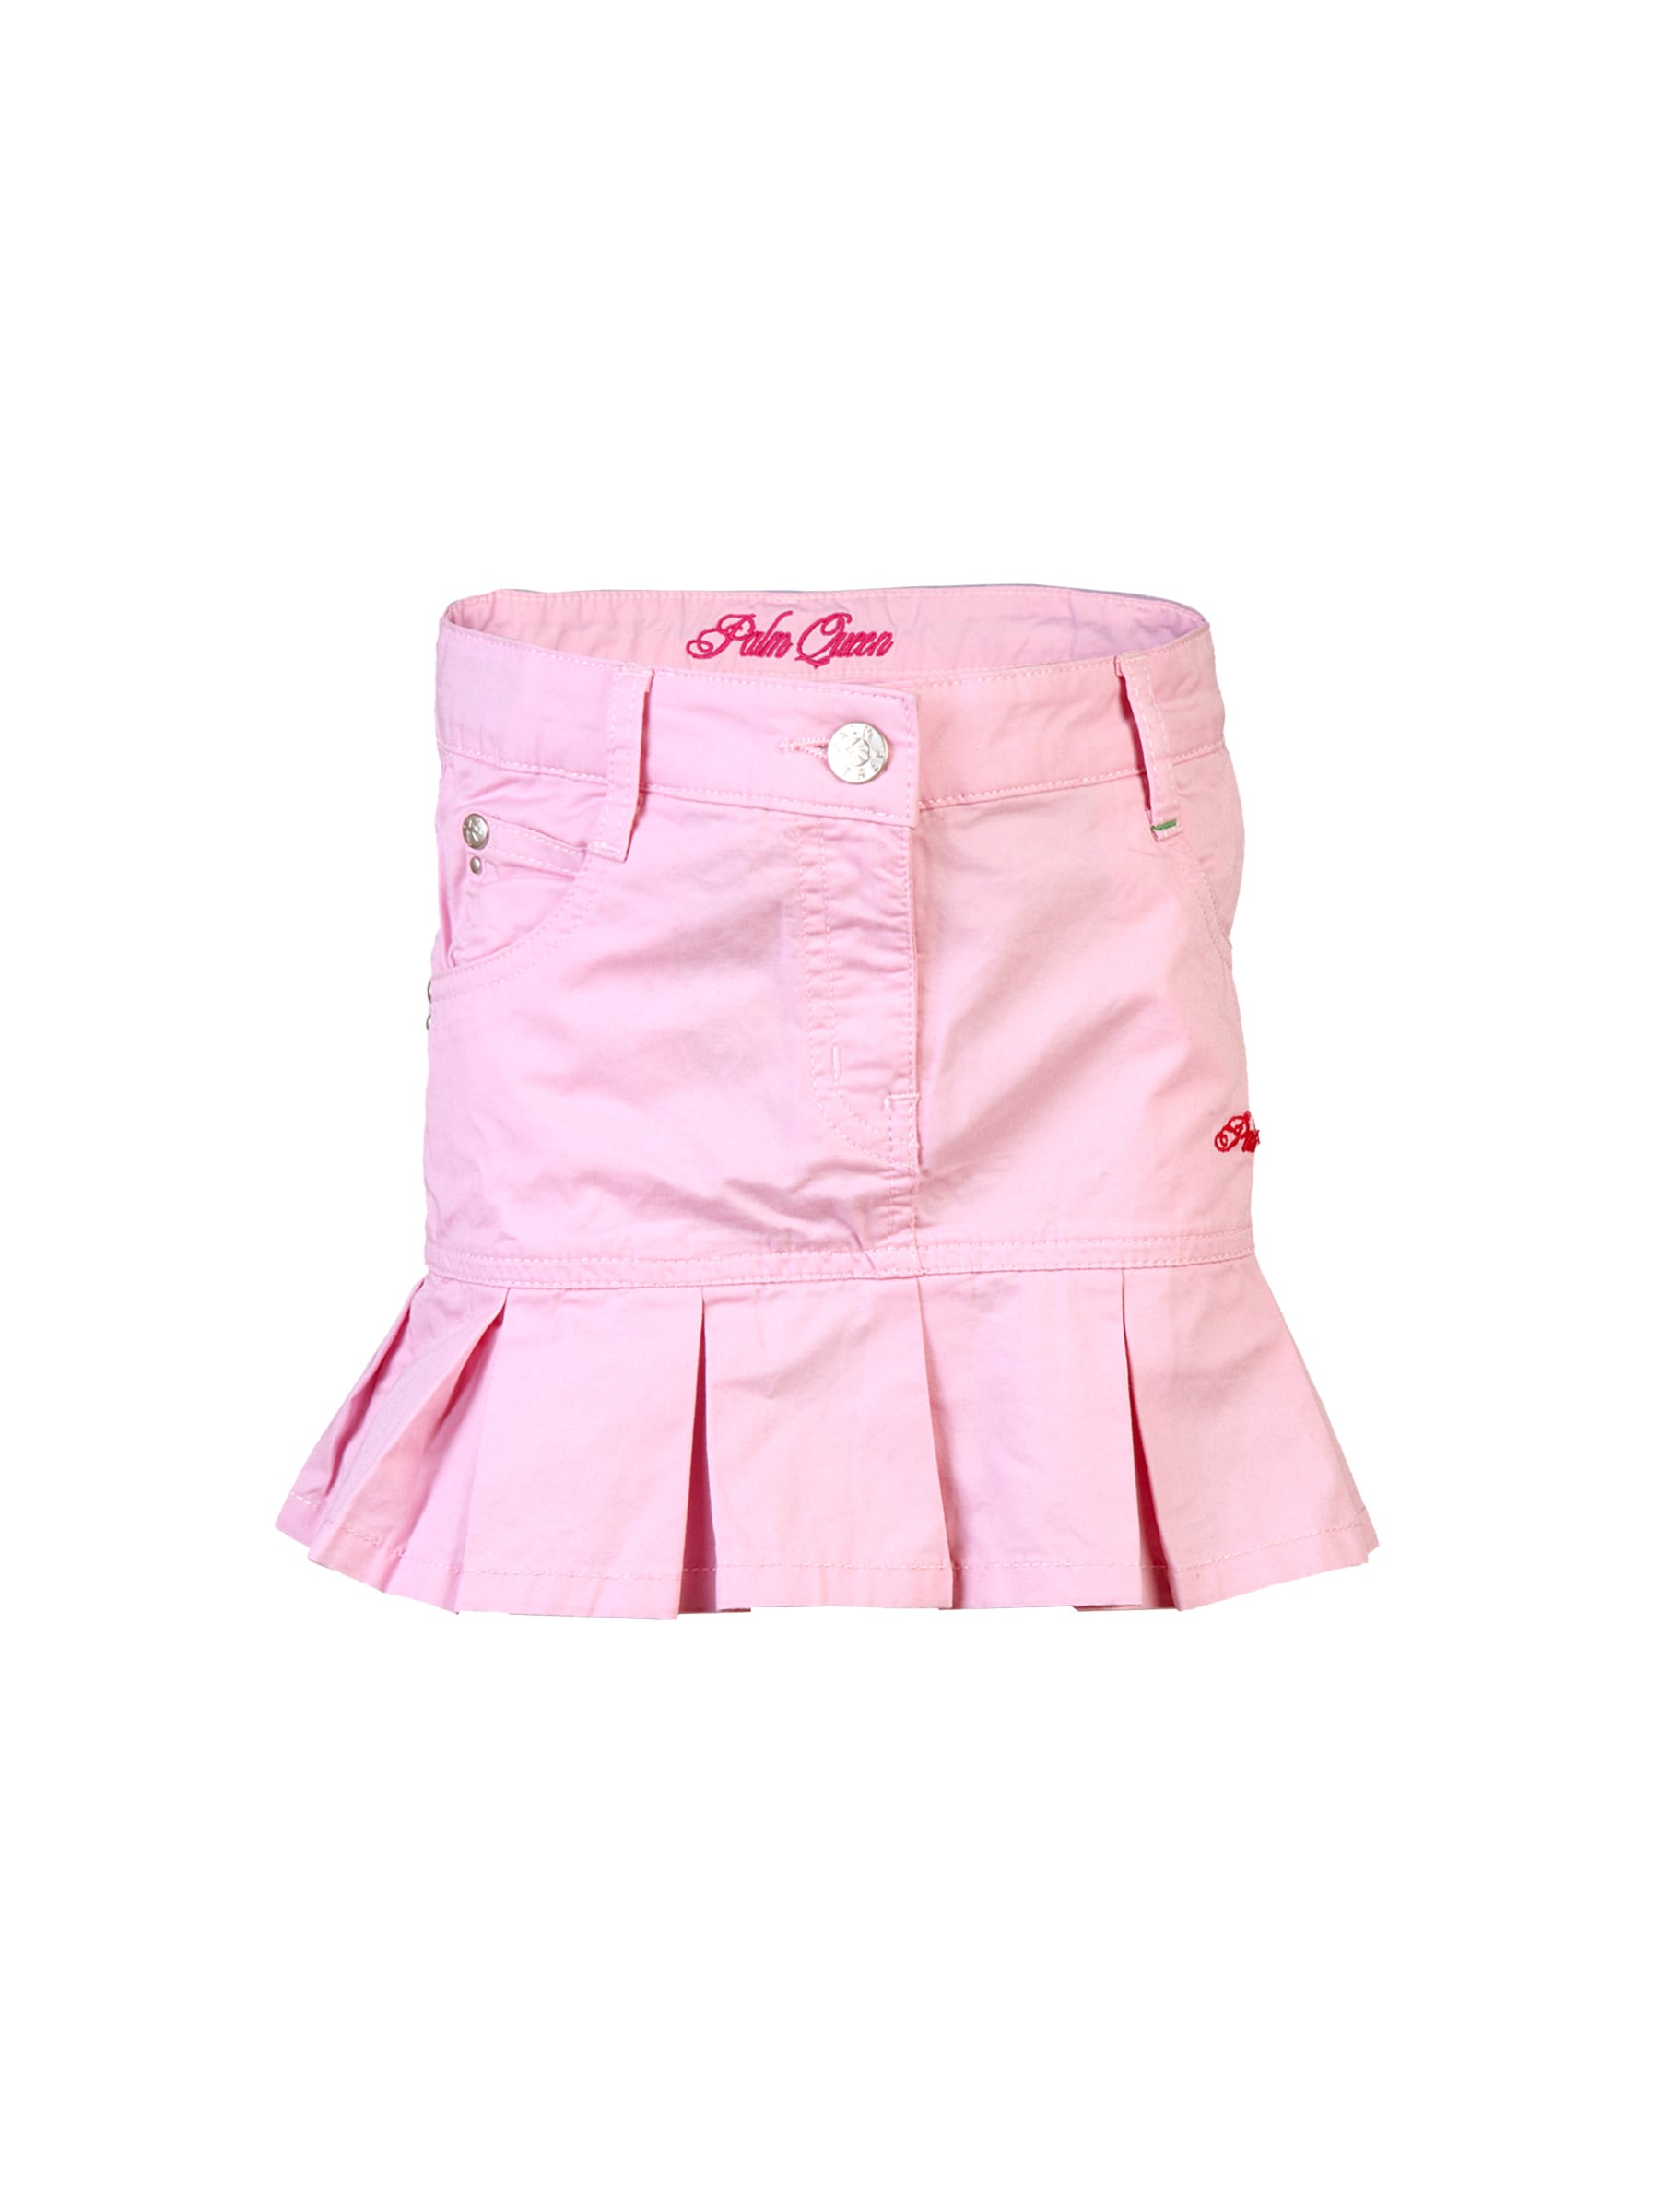 Palm Tree Kids Girls Solid Pink Skirts